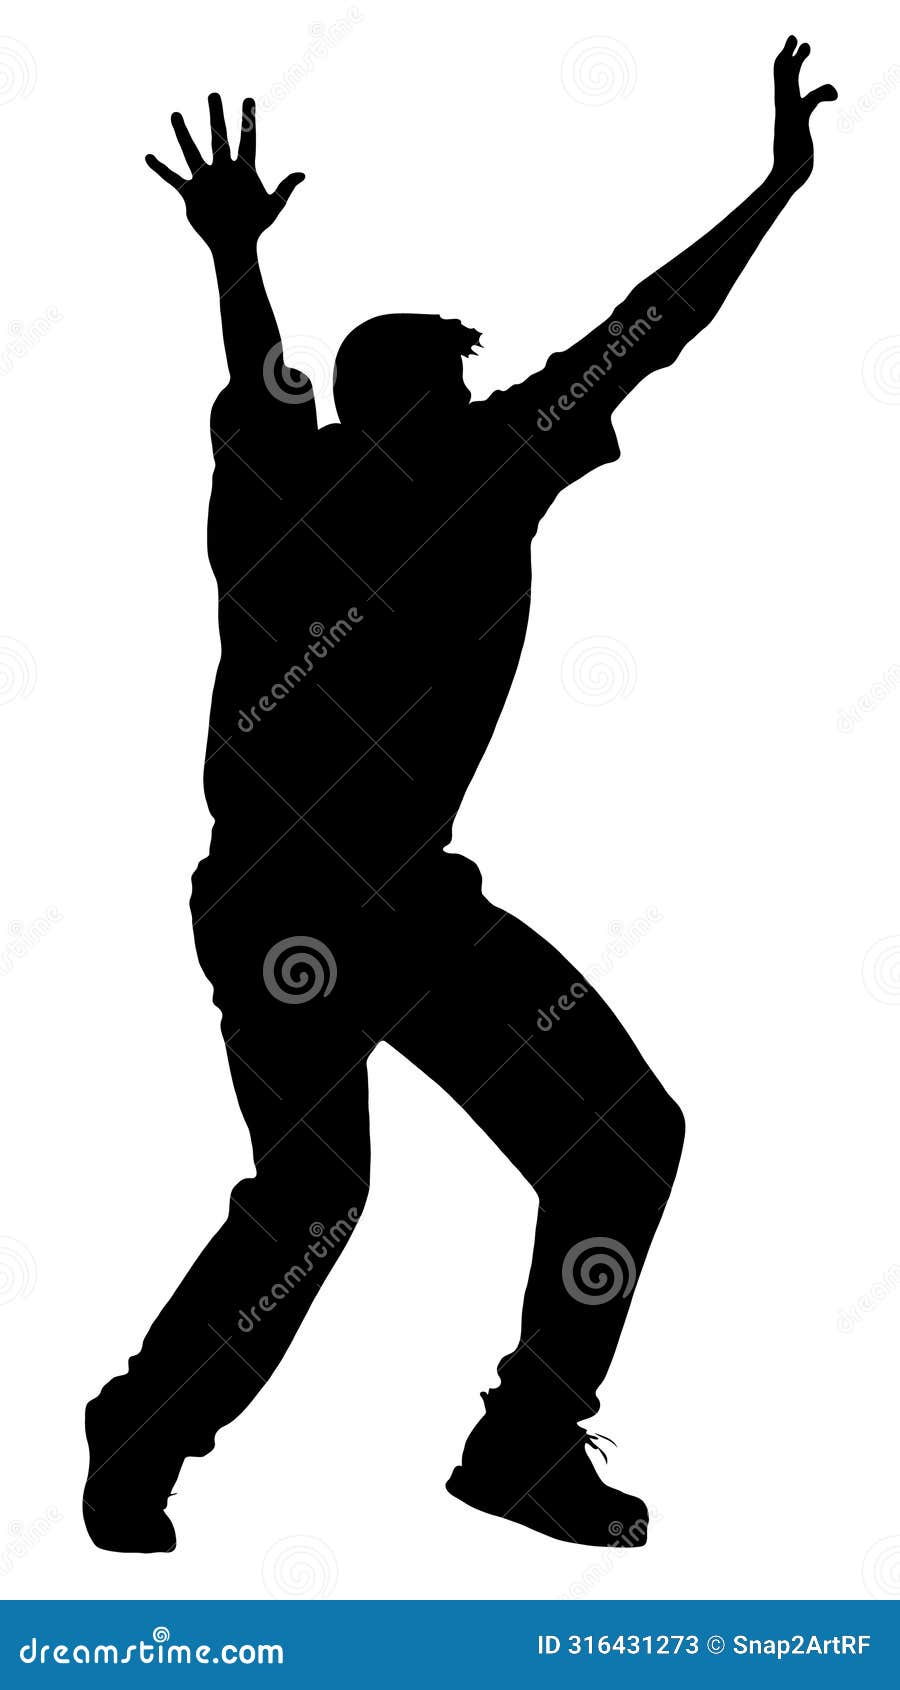 detailed sport silhouette Ã¢â¬â male or man cricket bowler appealing for lbw v2 refined